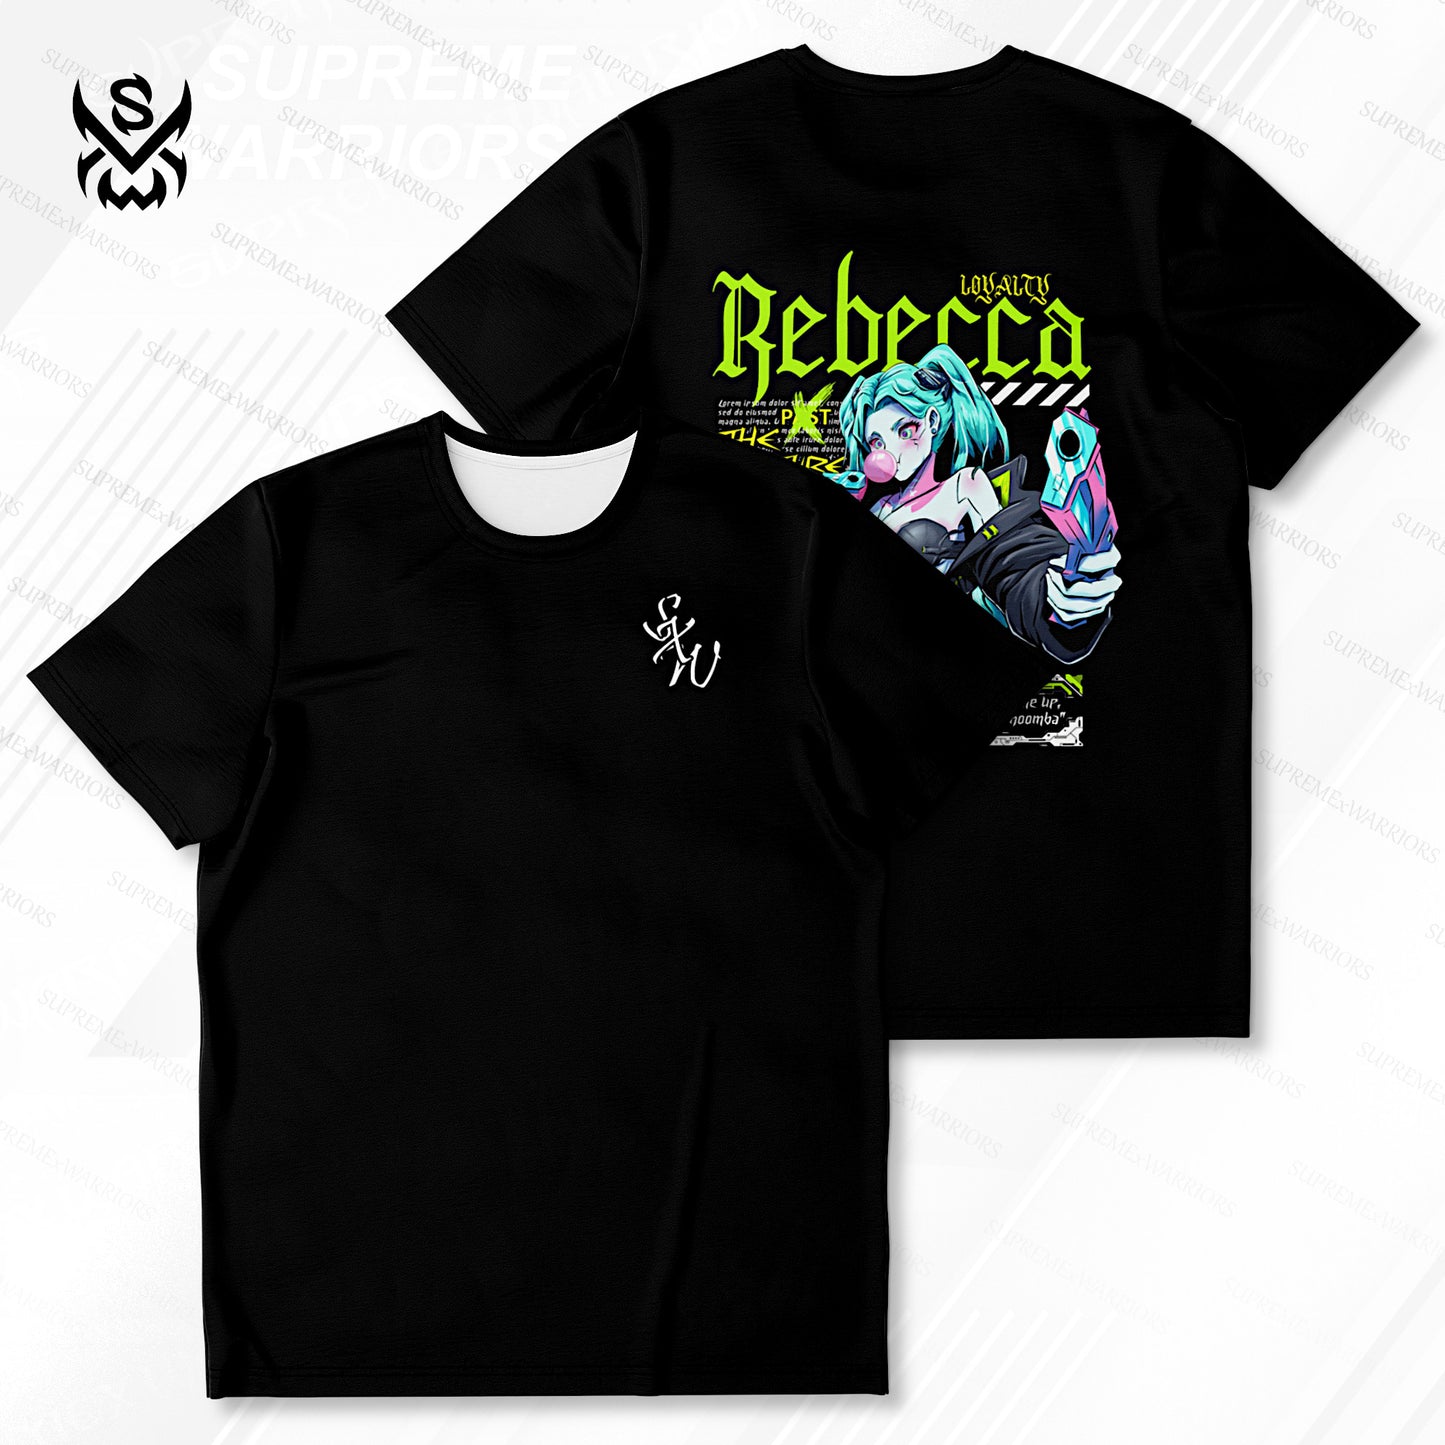 Rebecca T-shirt